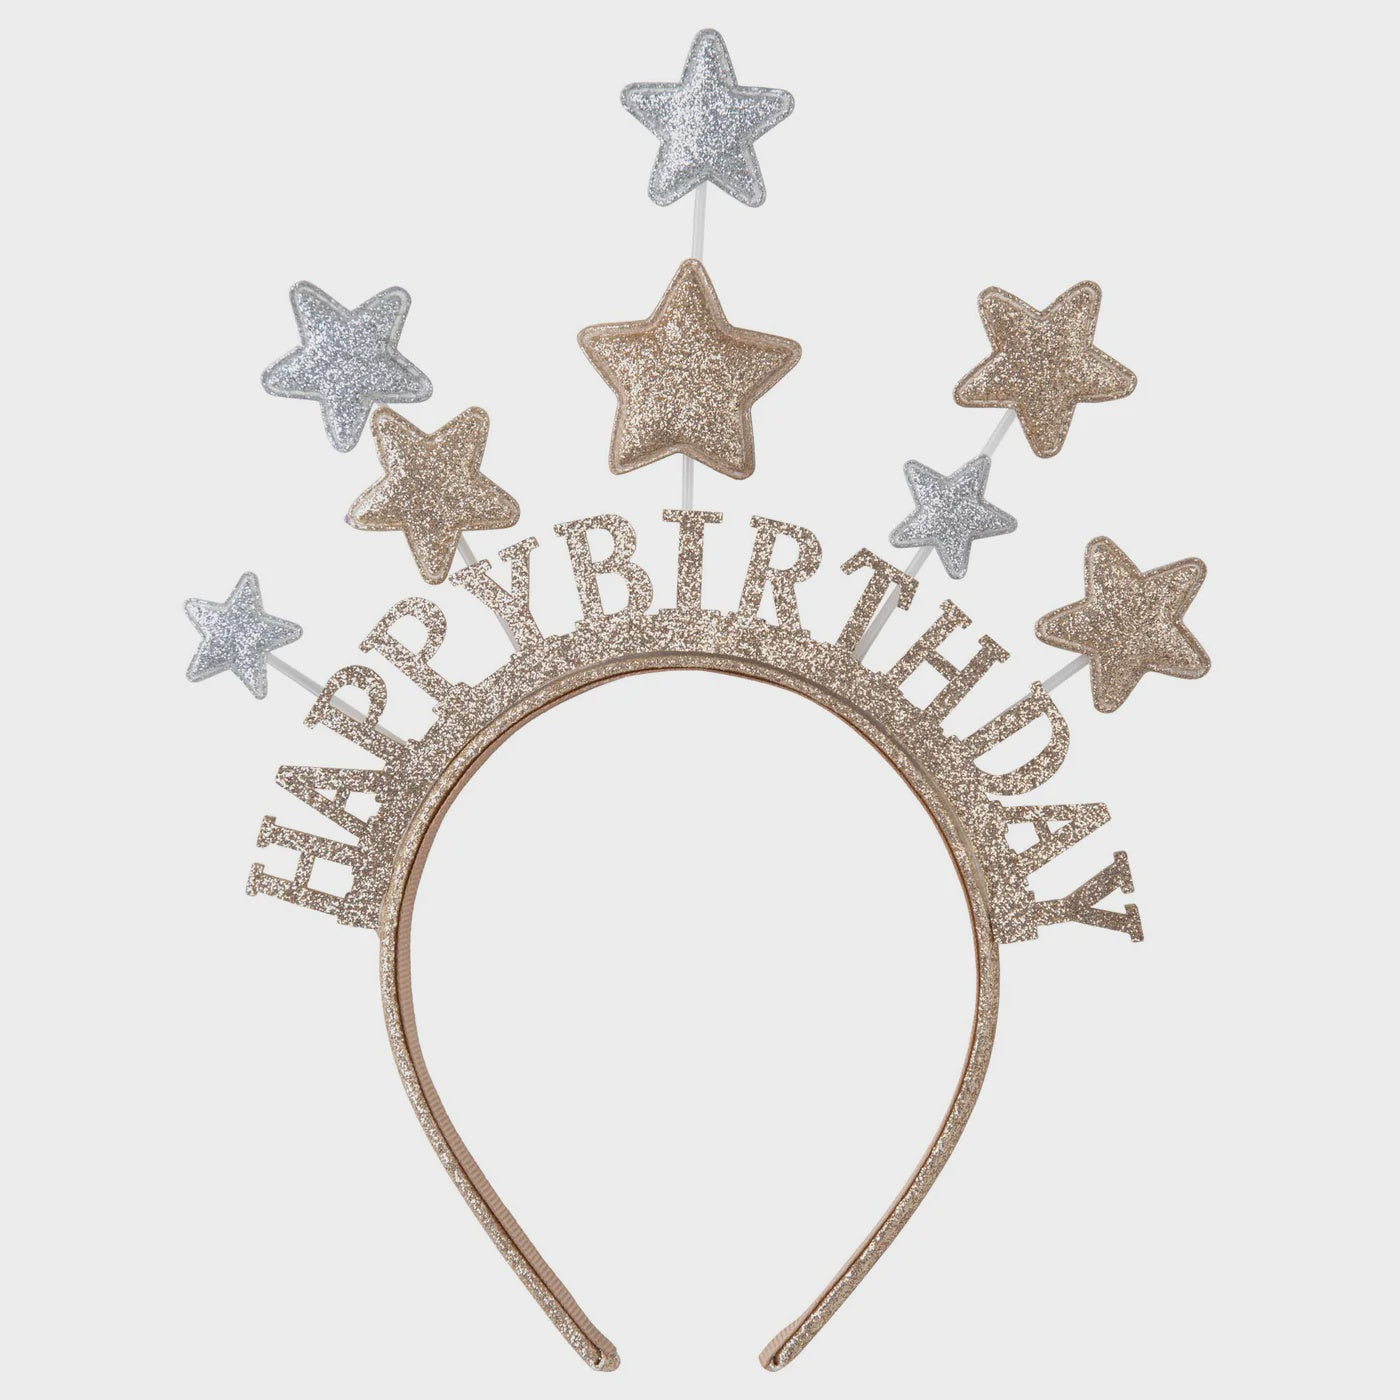 Designer Kidz - Birthday Star Headband - Gold